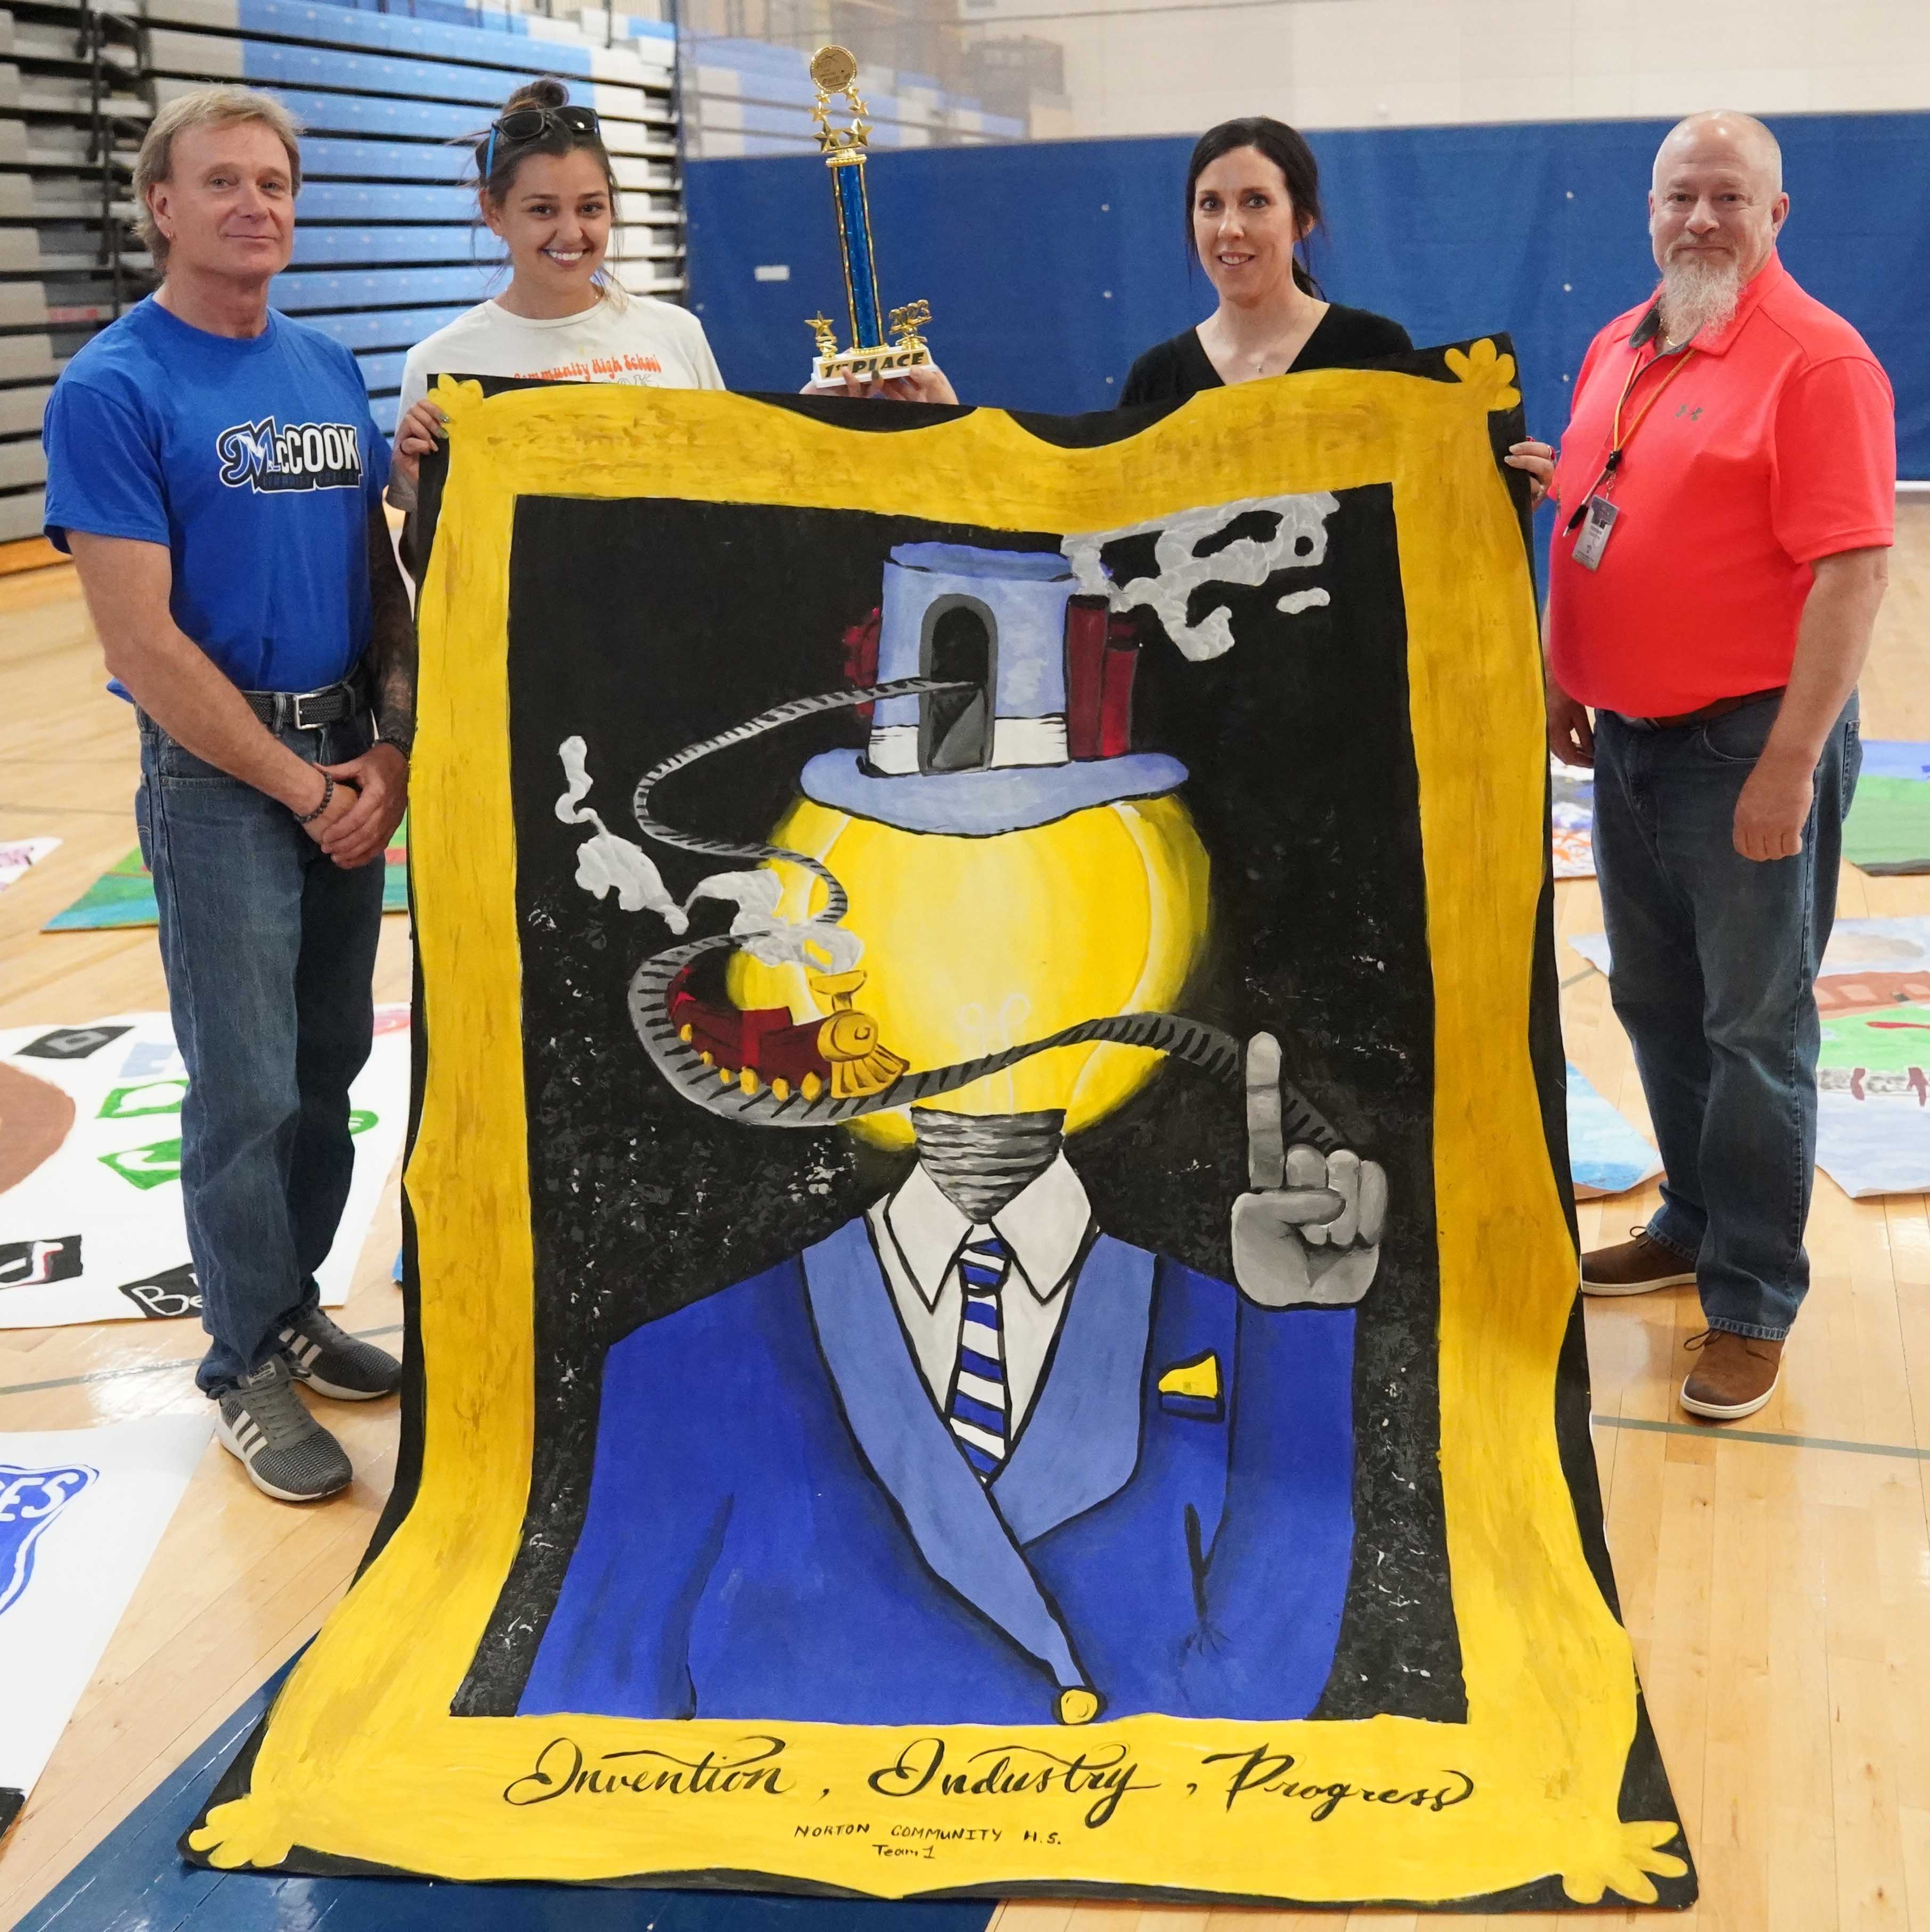 Norton Community High School's winning Paint-In entry